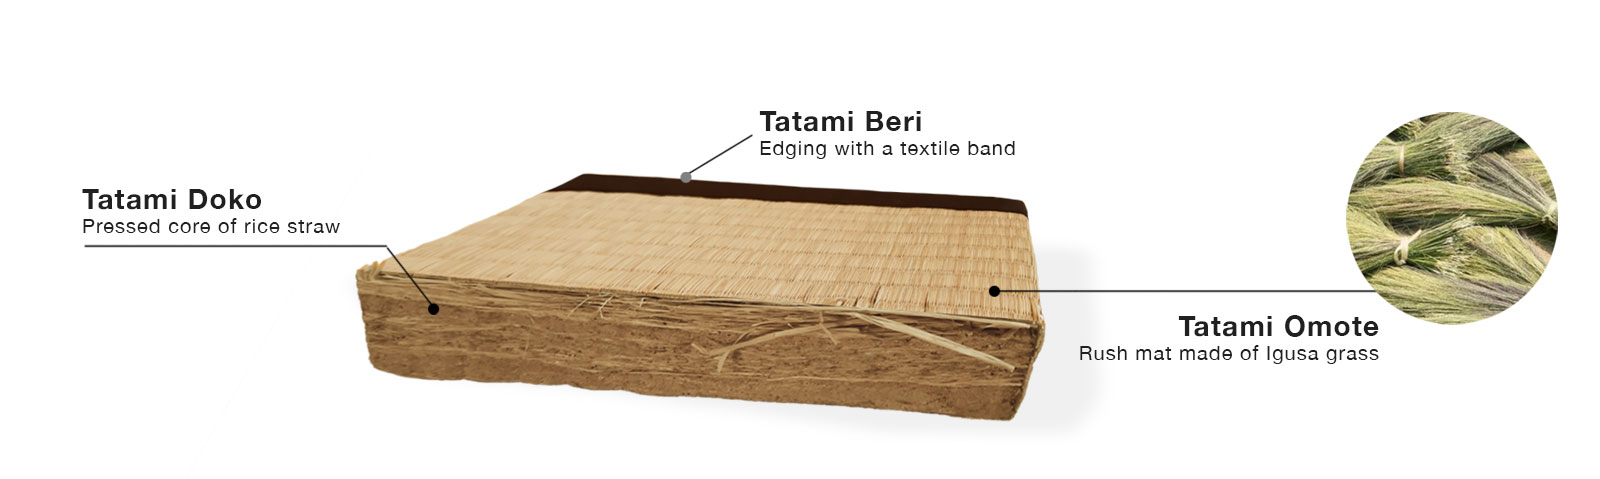 Tatami cross section